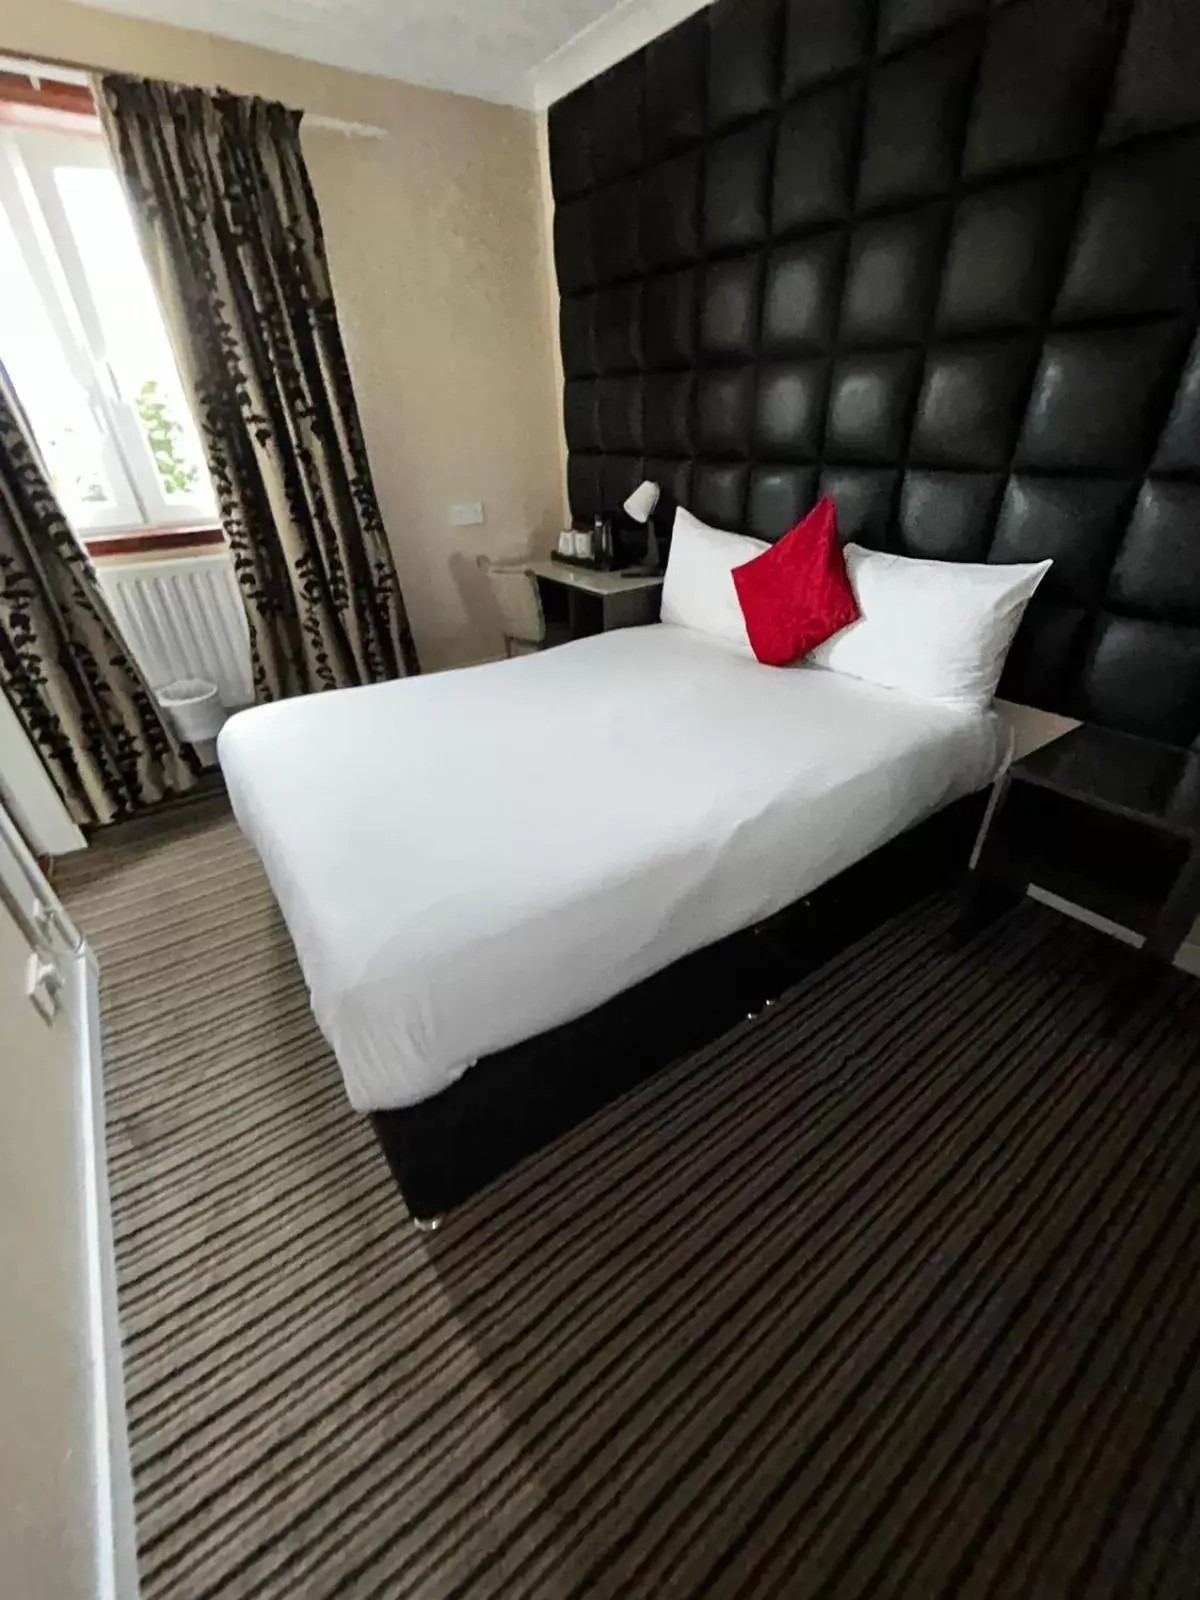 Bed in Kings Park Hotel